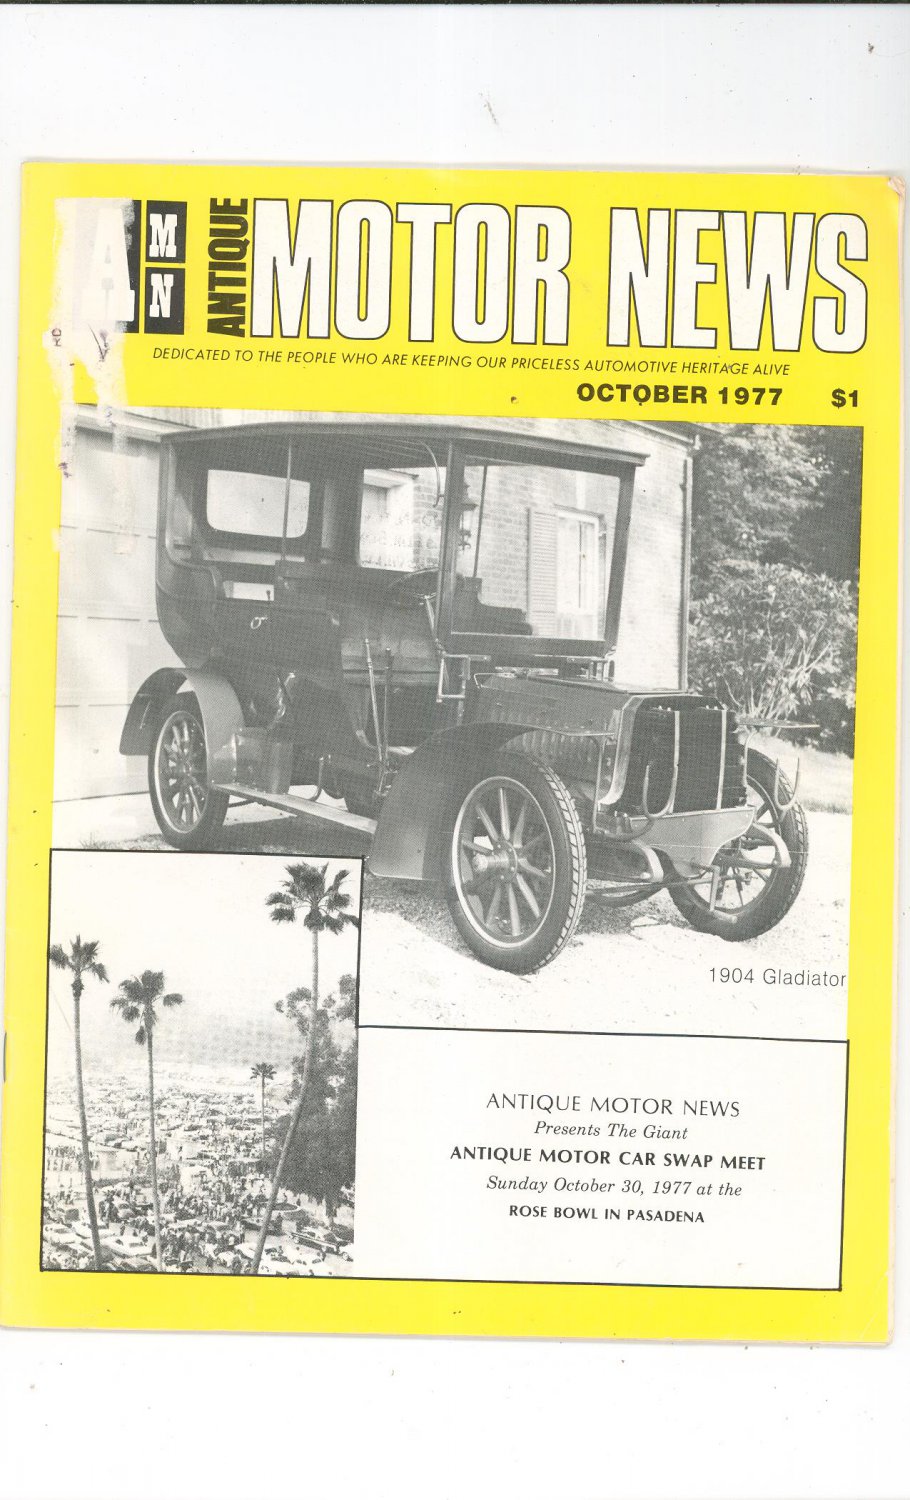 Antique Motor News Magazine October 1977 Vintage Back Issue 1904 Gladiator